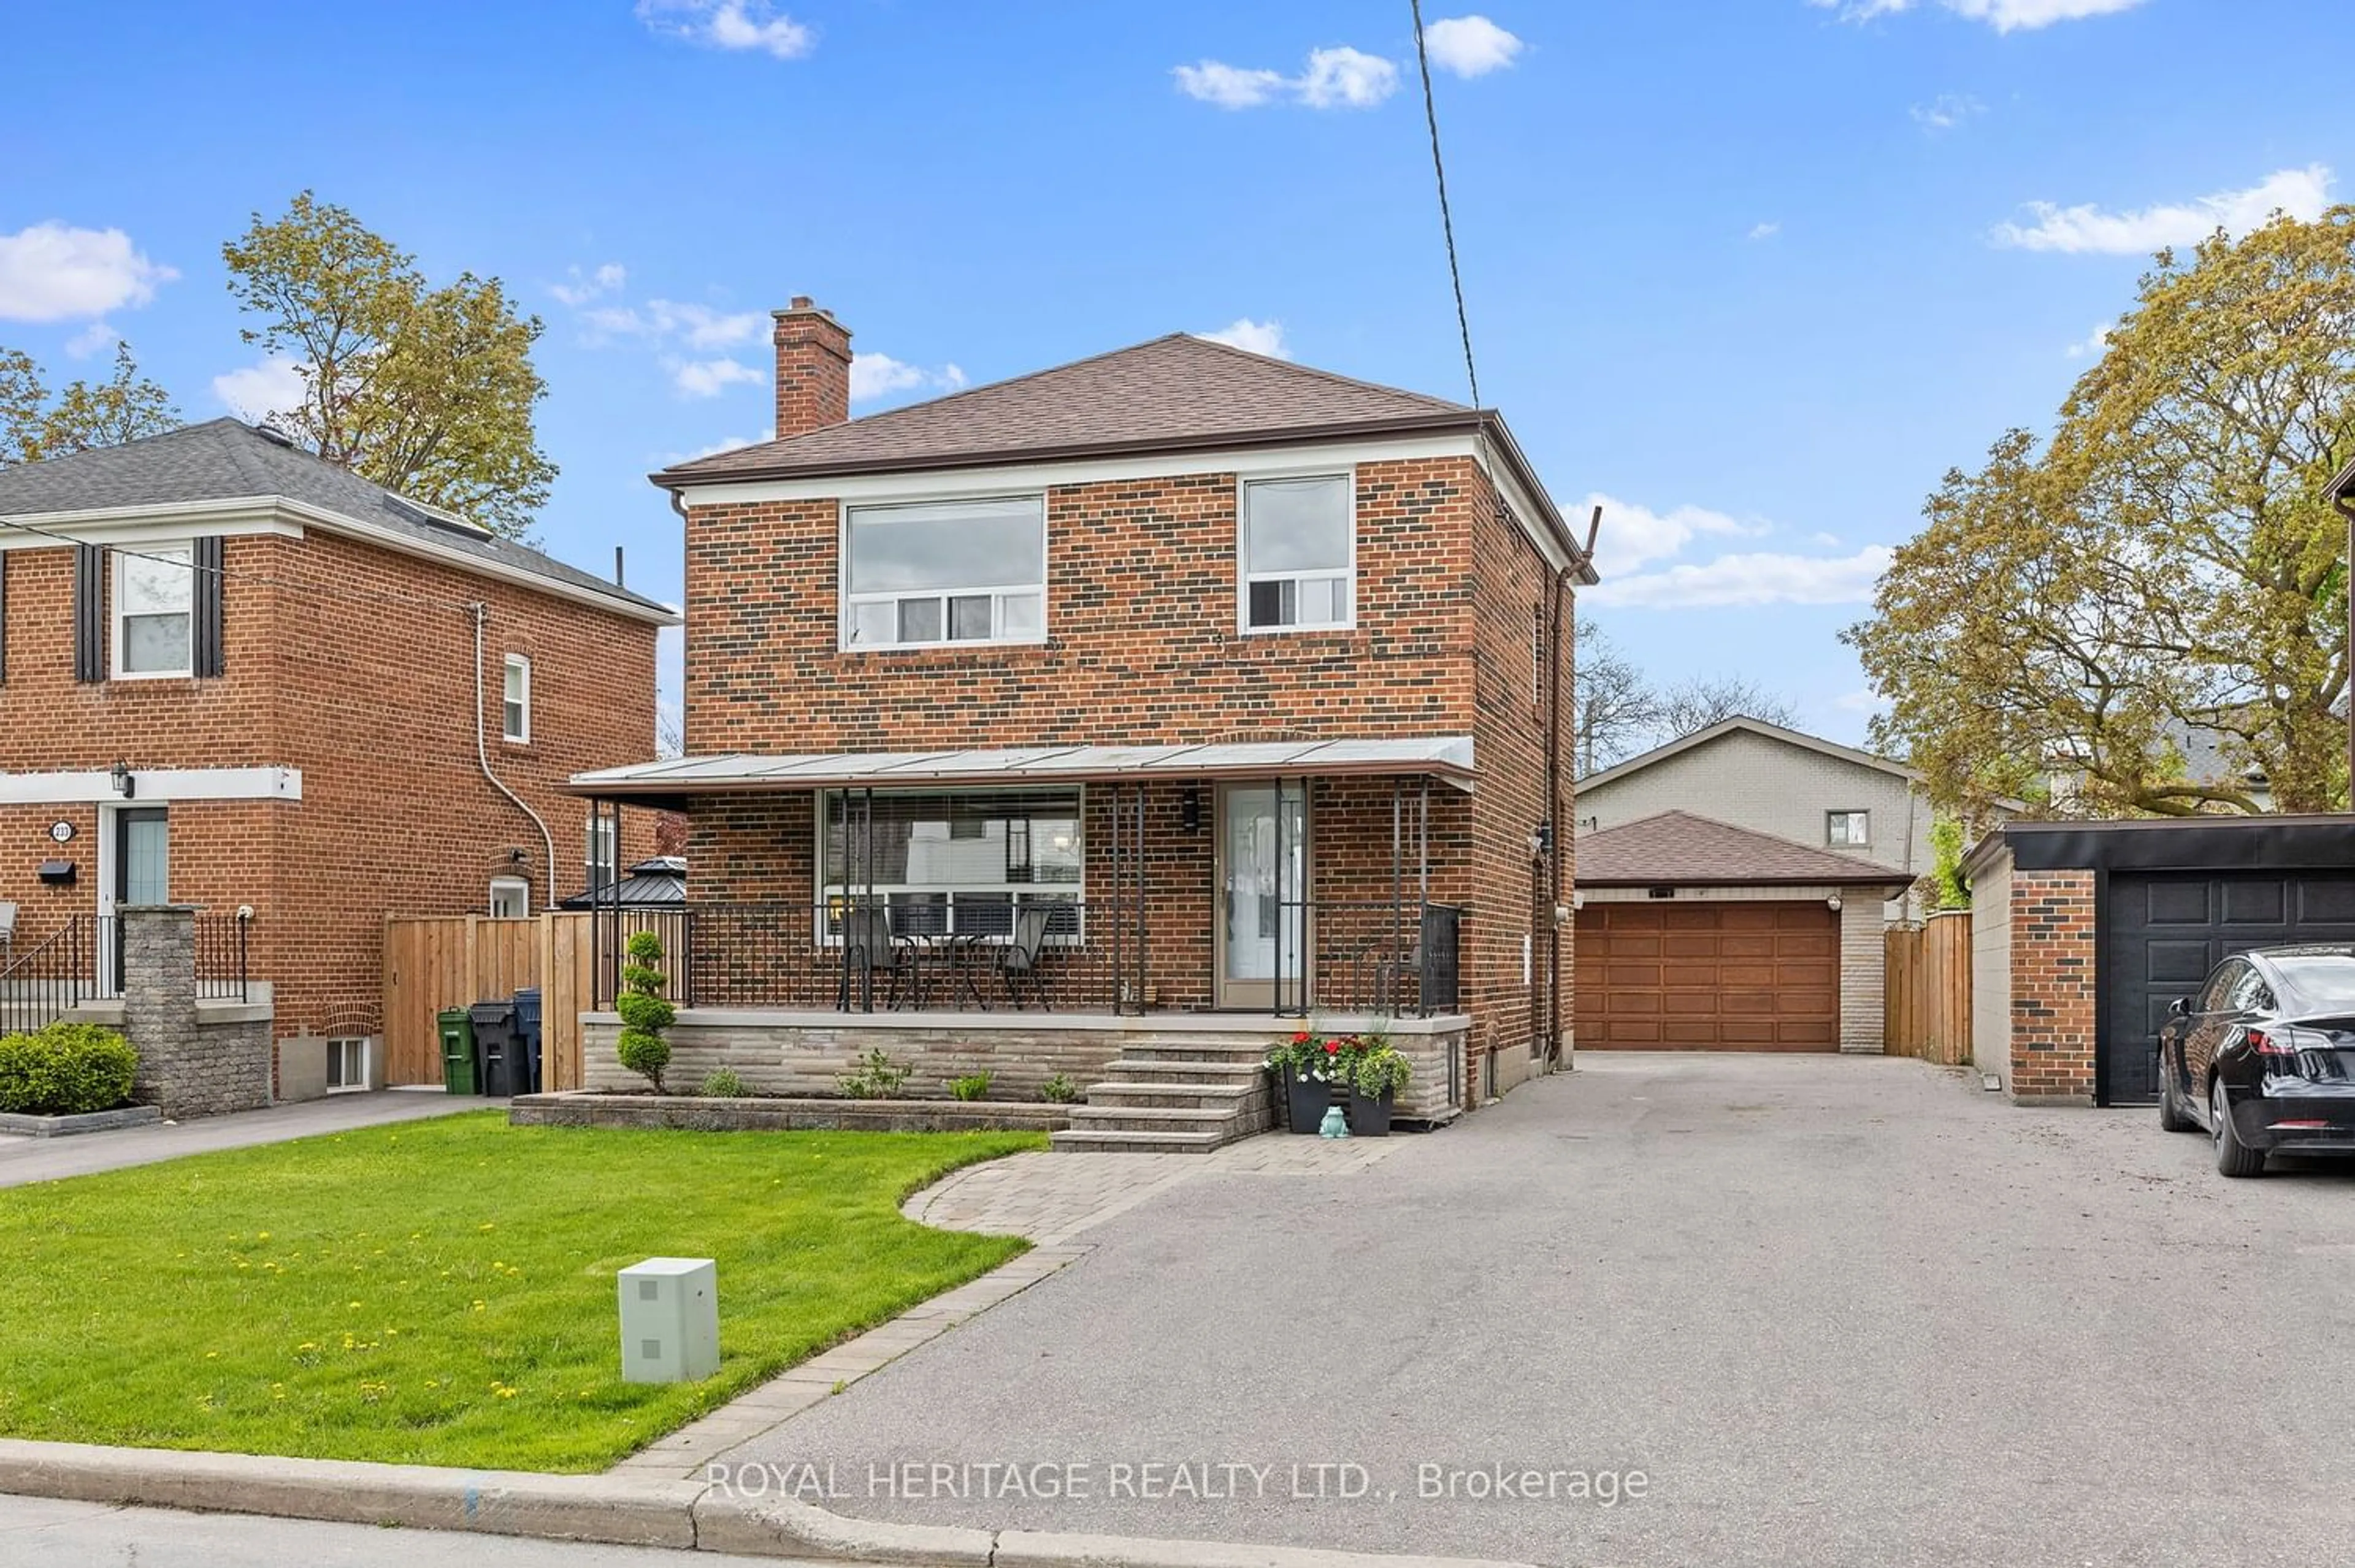 Home with brick exterior material for 235 Delhi Ave, Toronto Ontario M3H 1B1